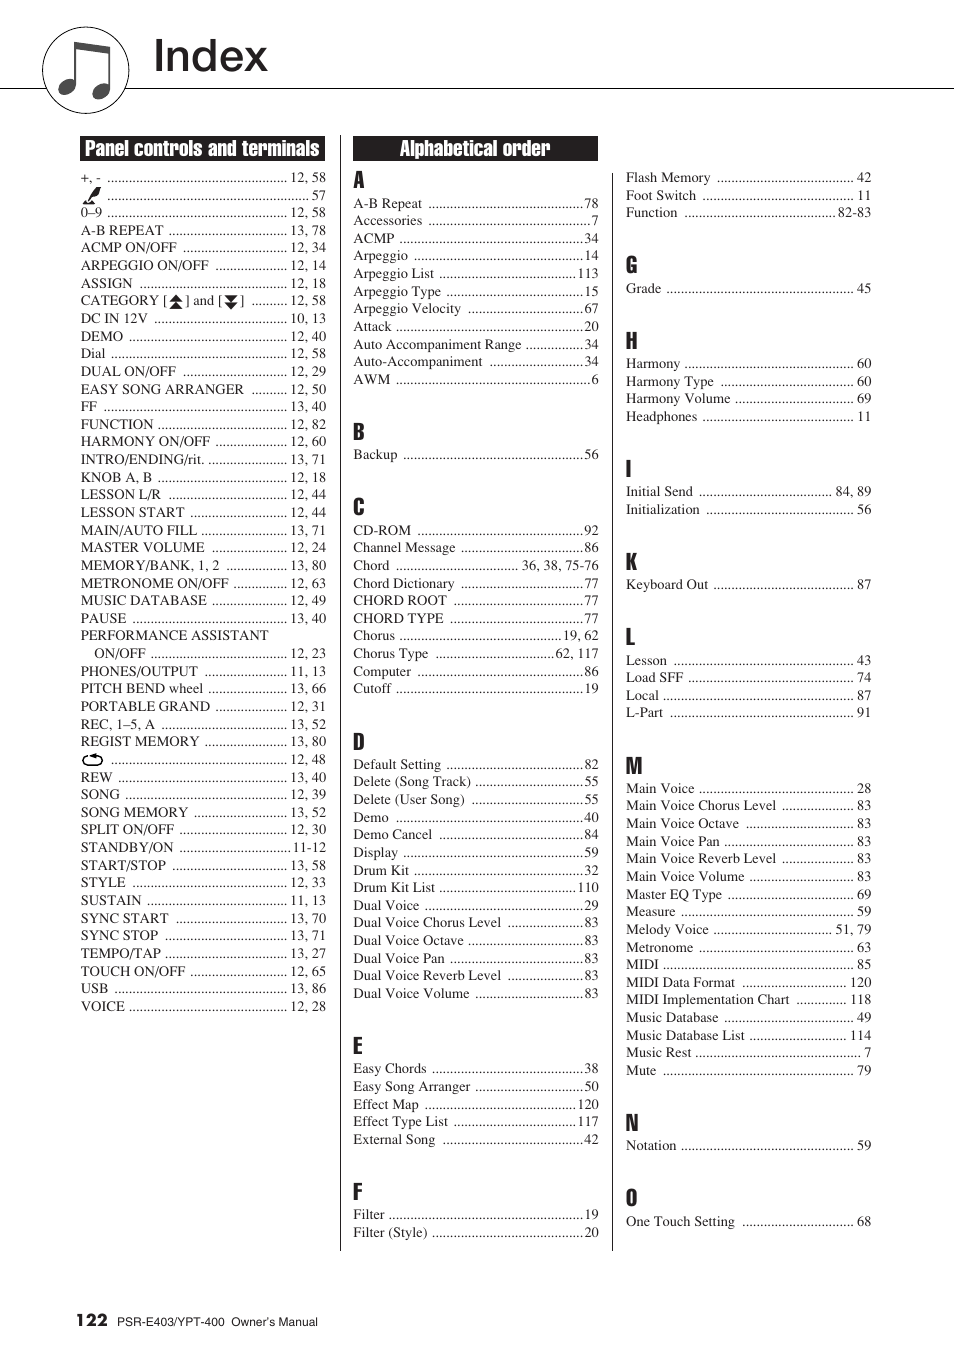 Index, Panel controls and terminals alphabetical order | Yamaha YPT-400